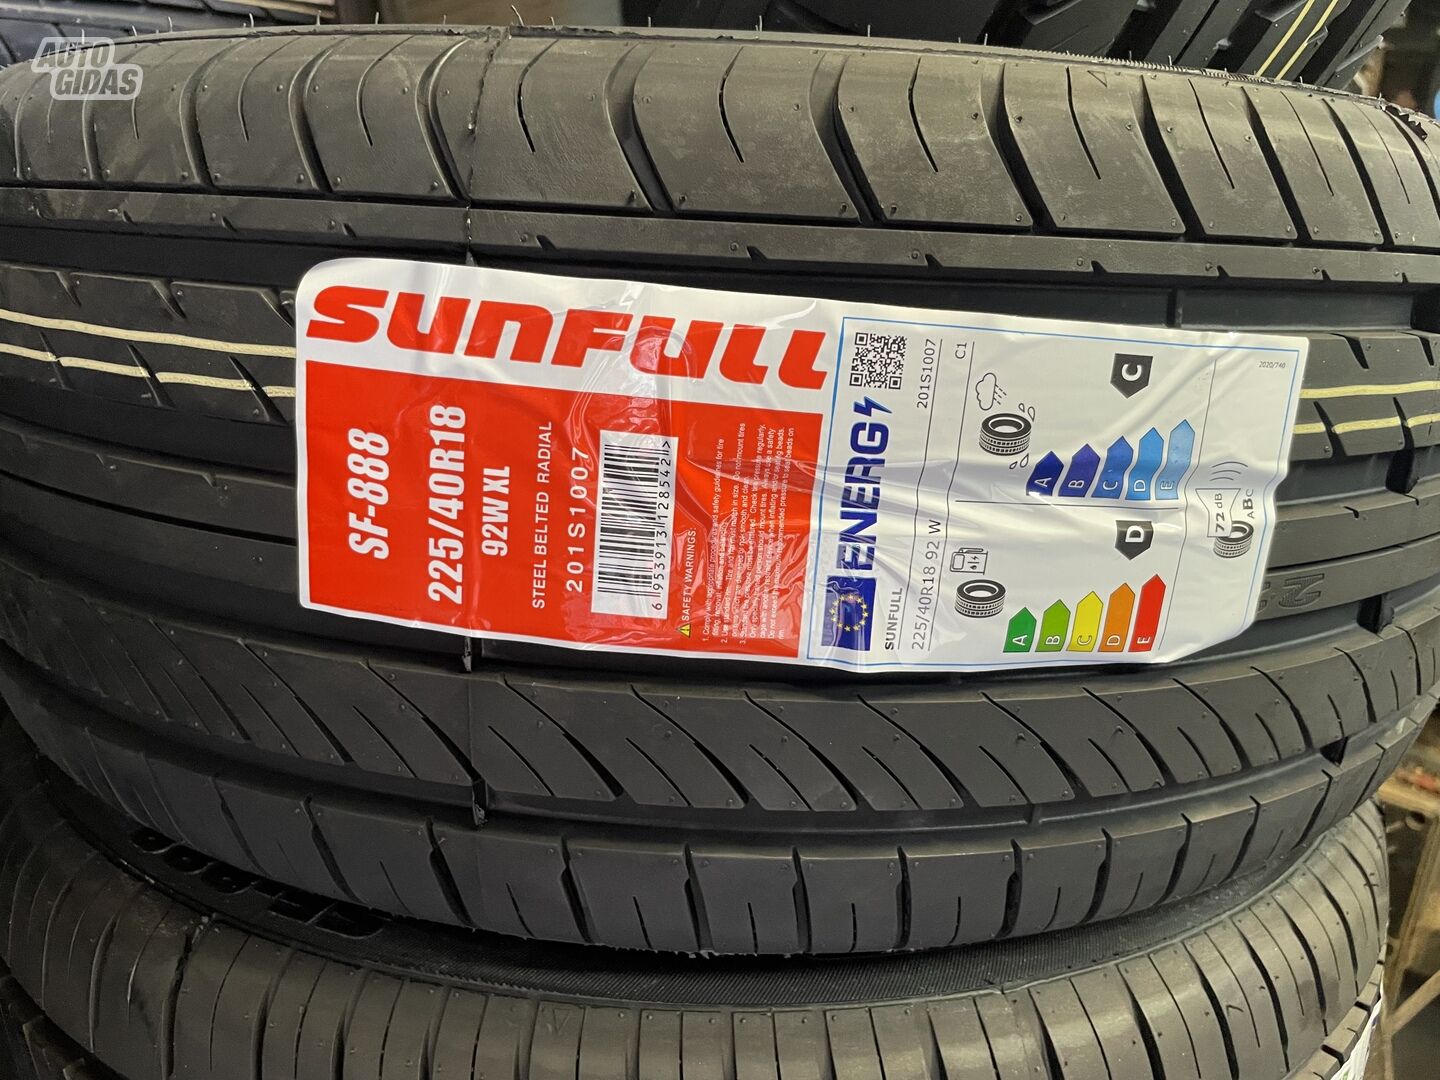 Sunfull Sf-888 R18 summer tyres passanger car